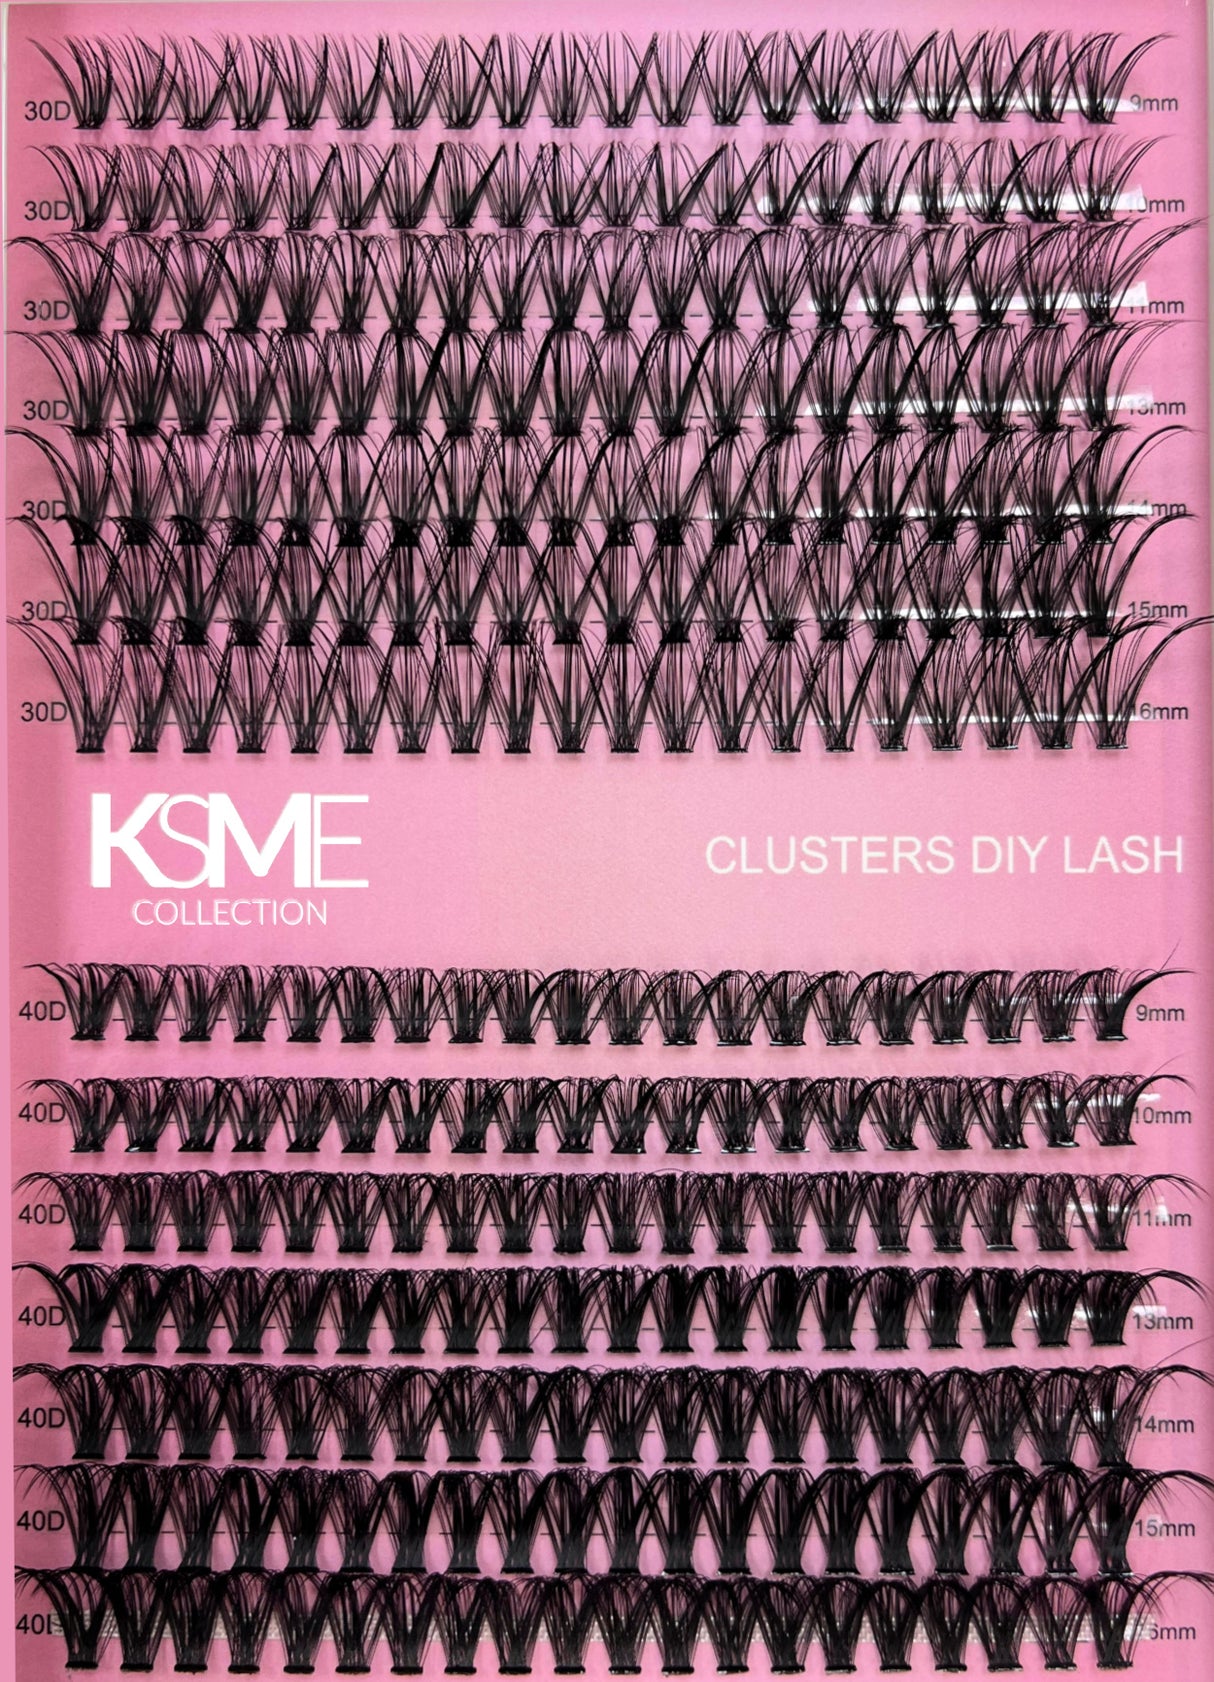 KSME DIY Lash Clusters